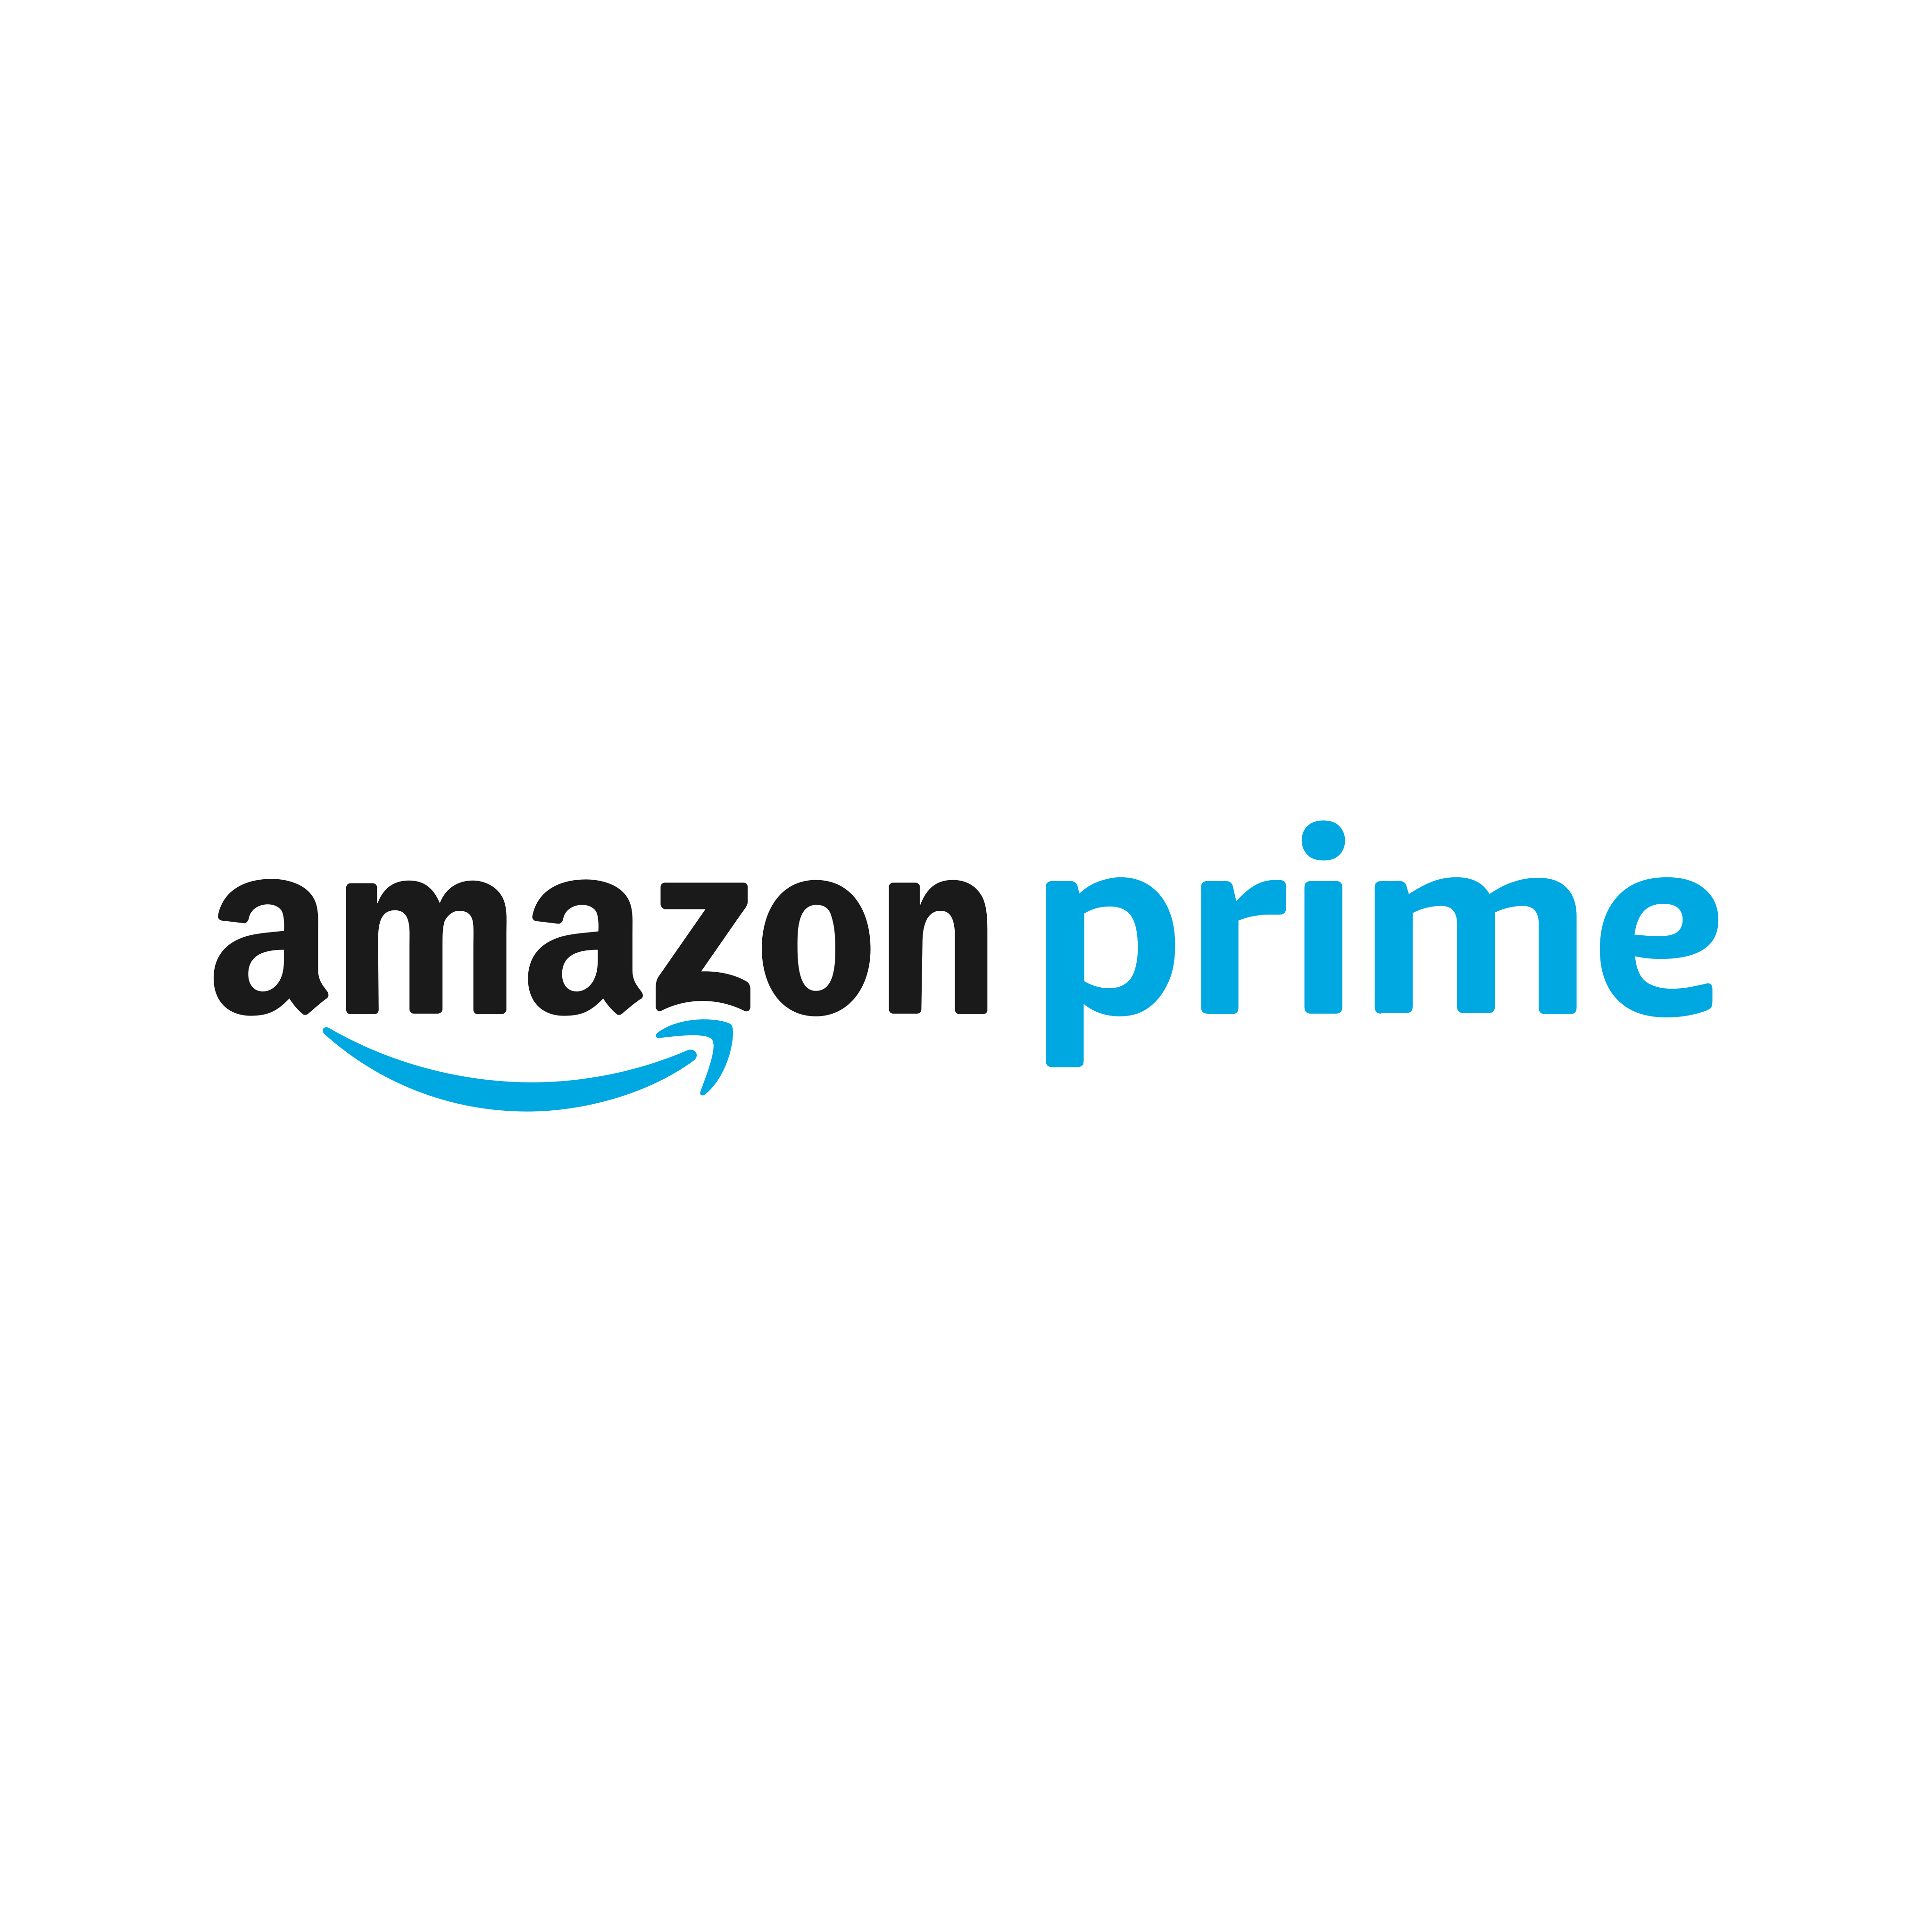 Amazon Prime Logo PNG.